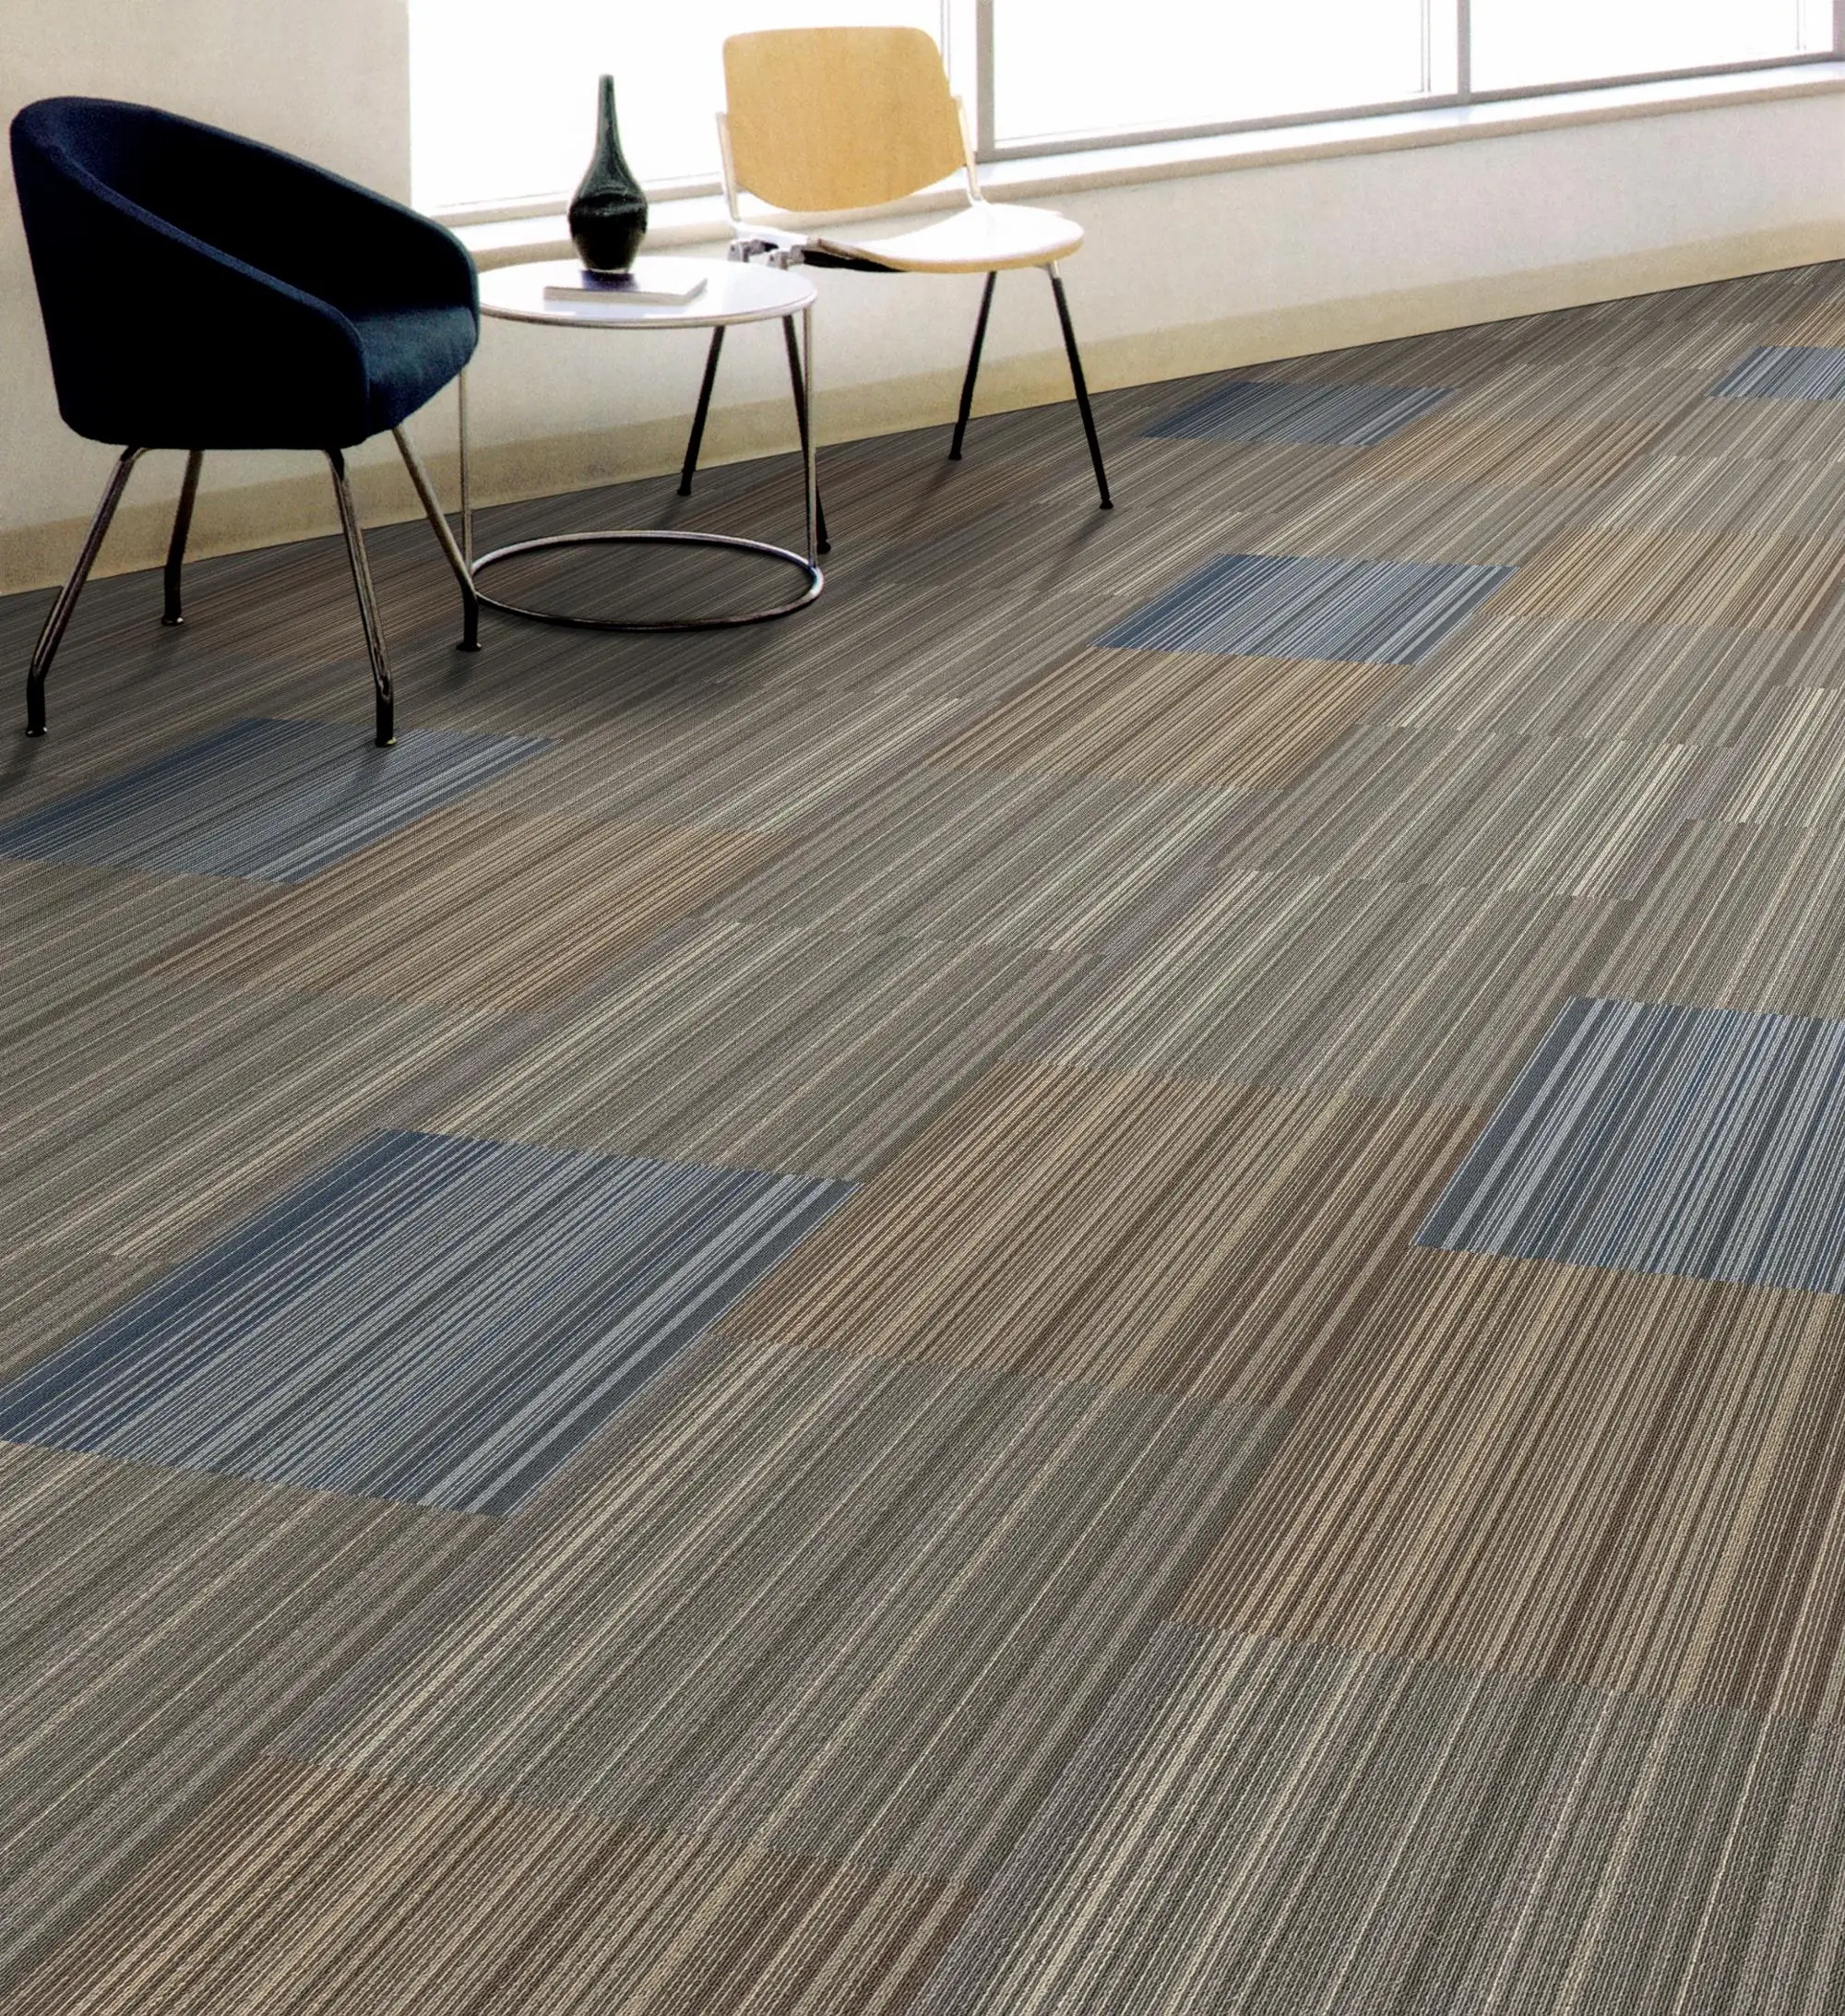 Striped Pattern Pp Blue&grey Carpet Tile For Office 50x50 Carpet Square Buy Striped Carpet